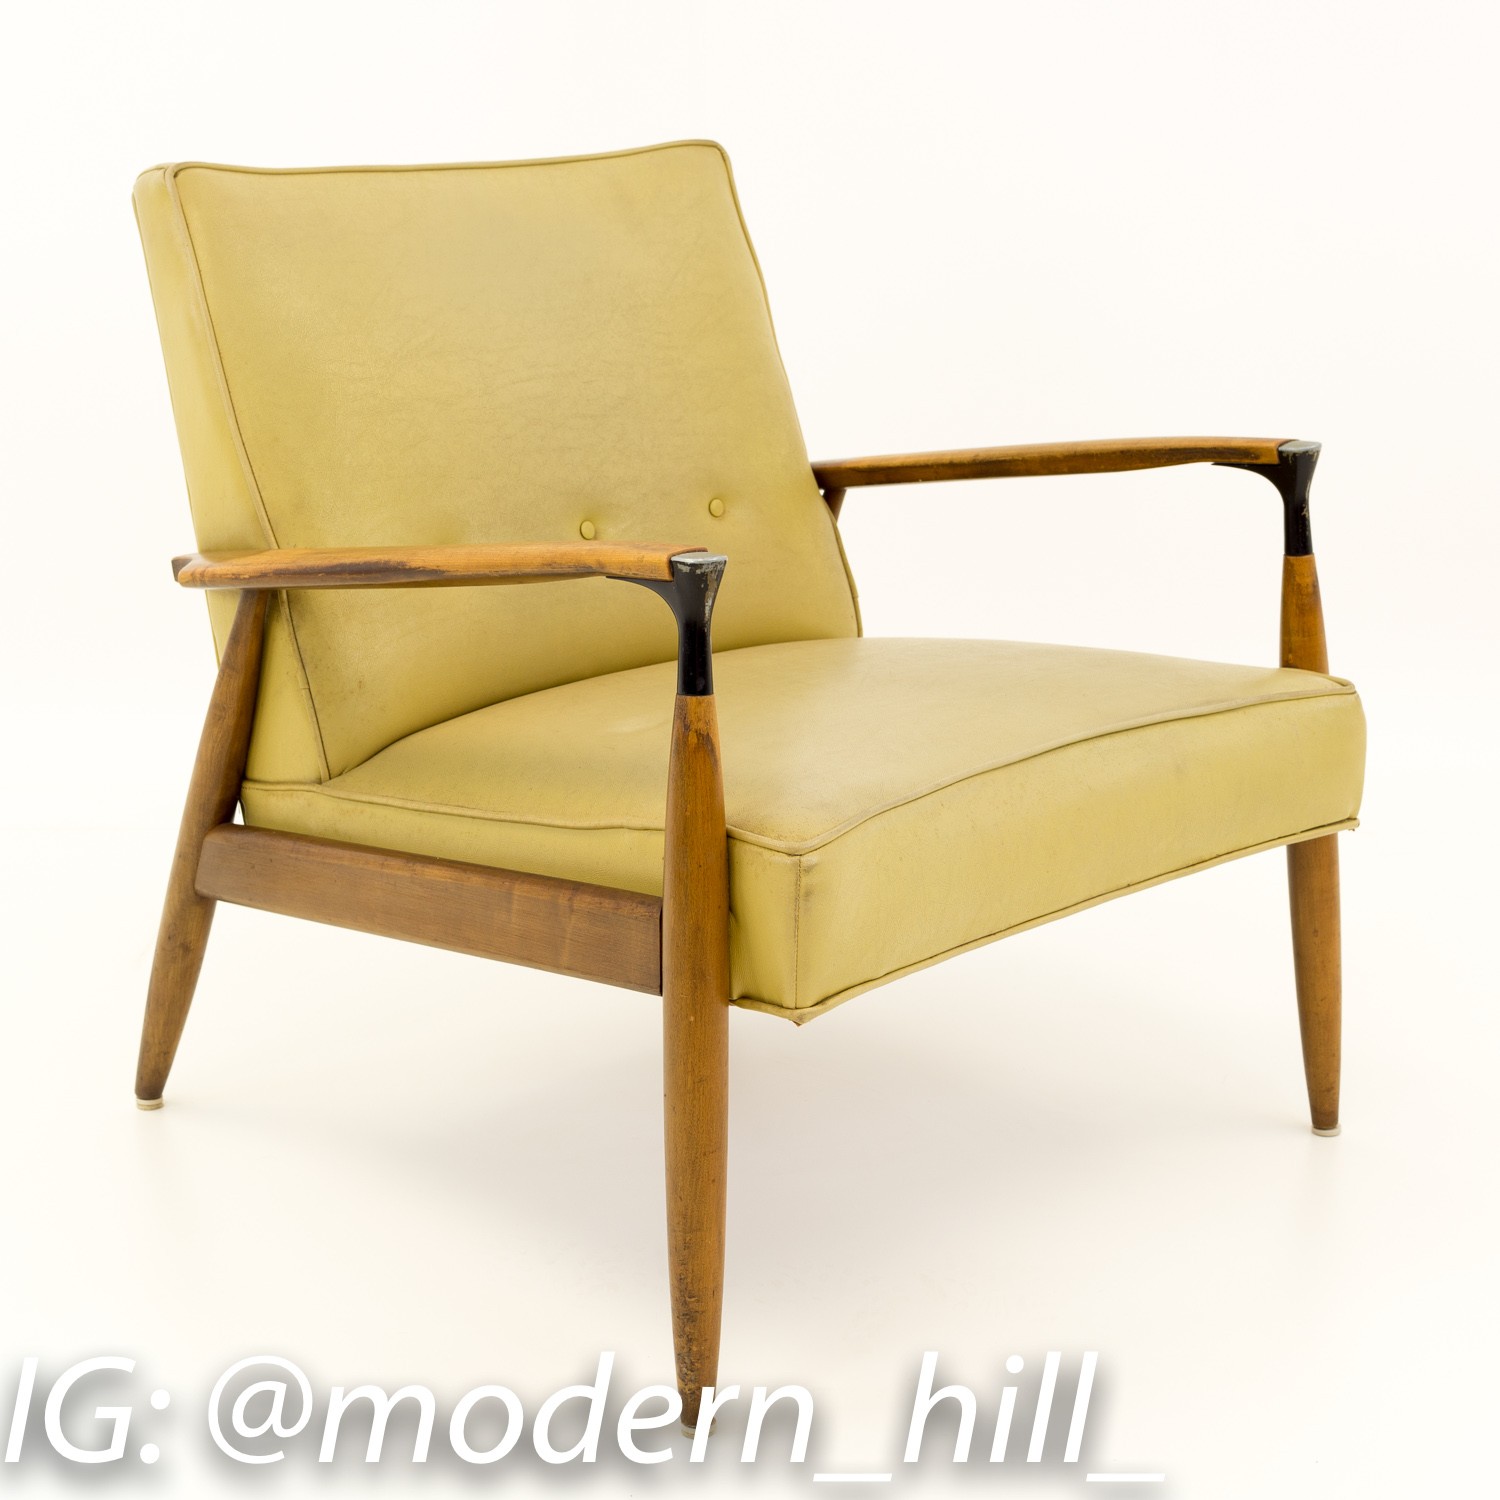 Kofod Larsen Style Kroehler Mid Century Walnut Lounge Chairs - Matching Pair